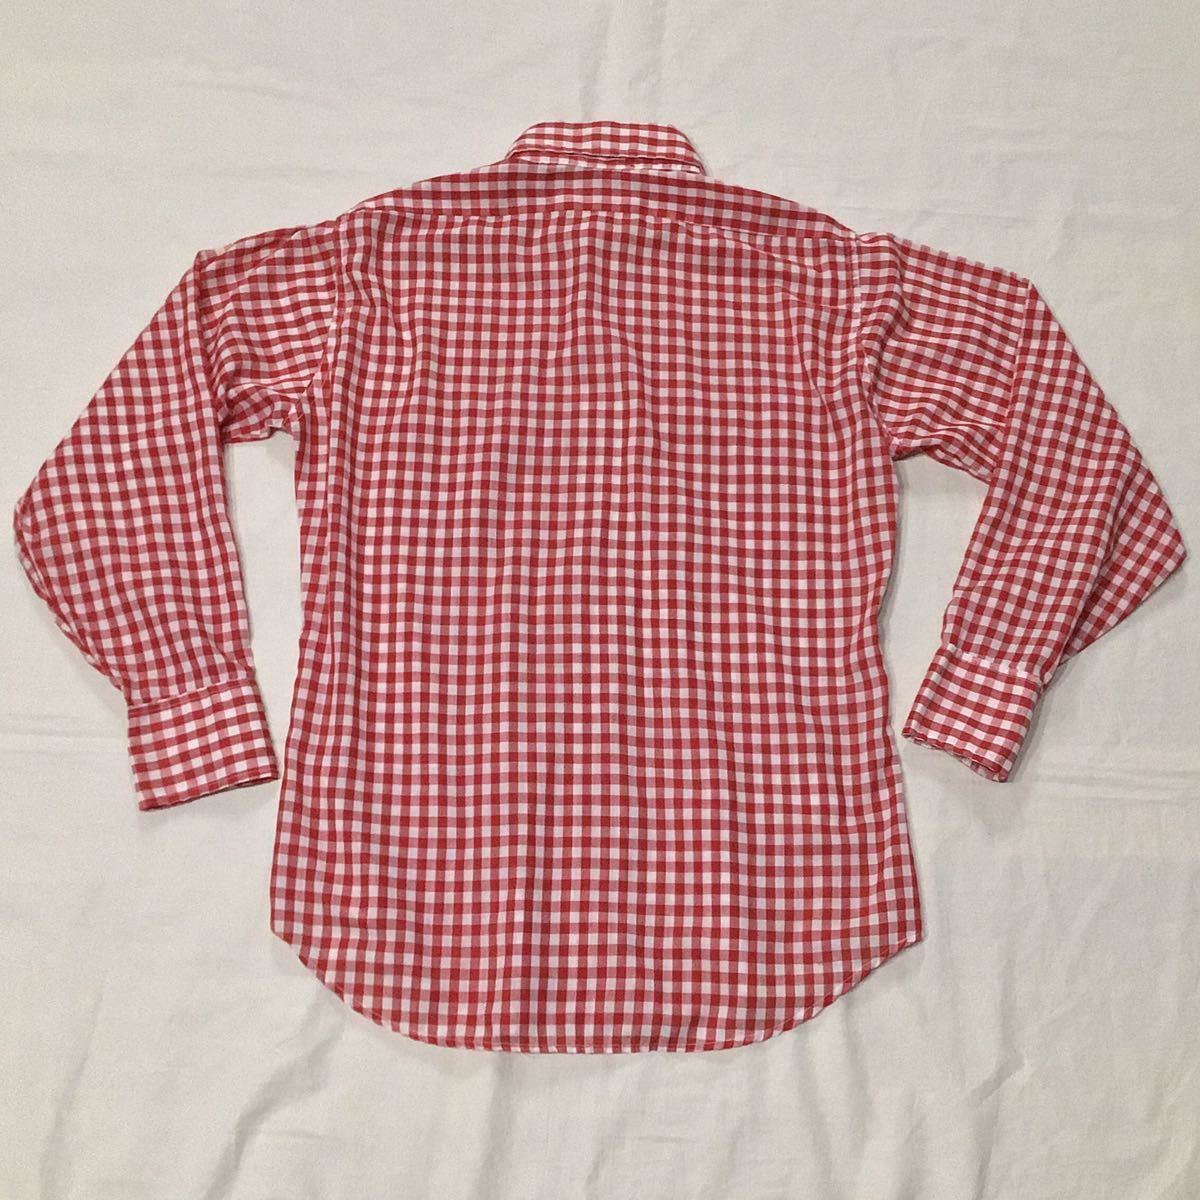 70s Levi’s リーバイス ギンガムチェック柄 ウエスタンシャツ S 赤 / ヴィンテージ ビンテージ チェックシャツ アメリカ製 USA製  50s60s